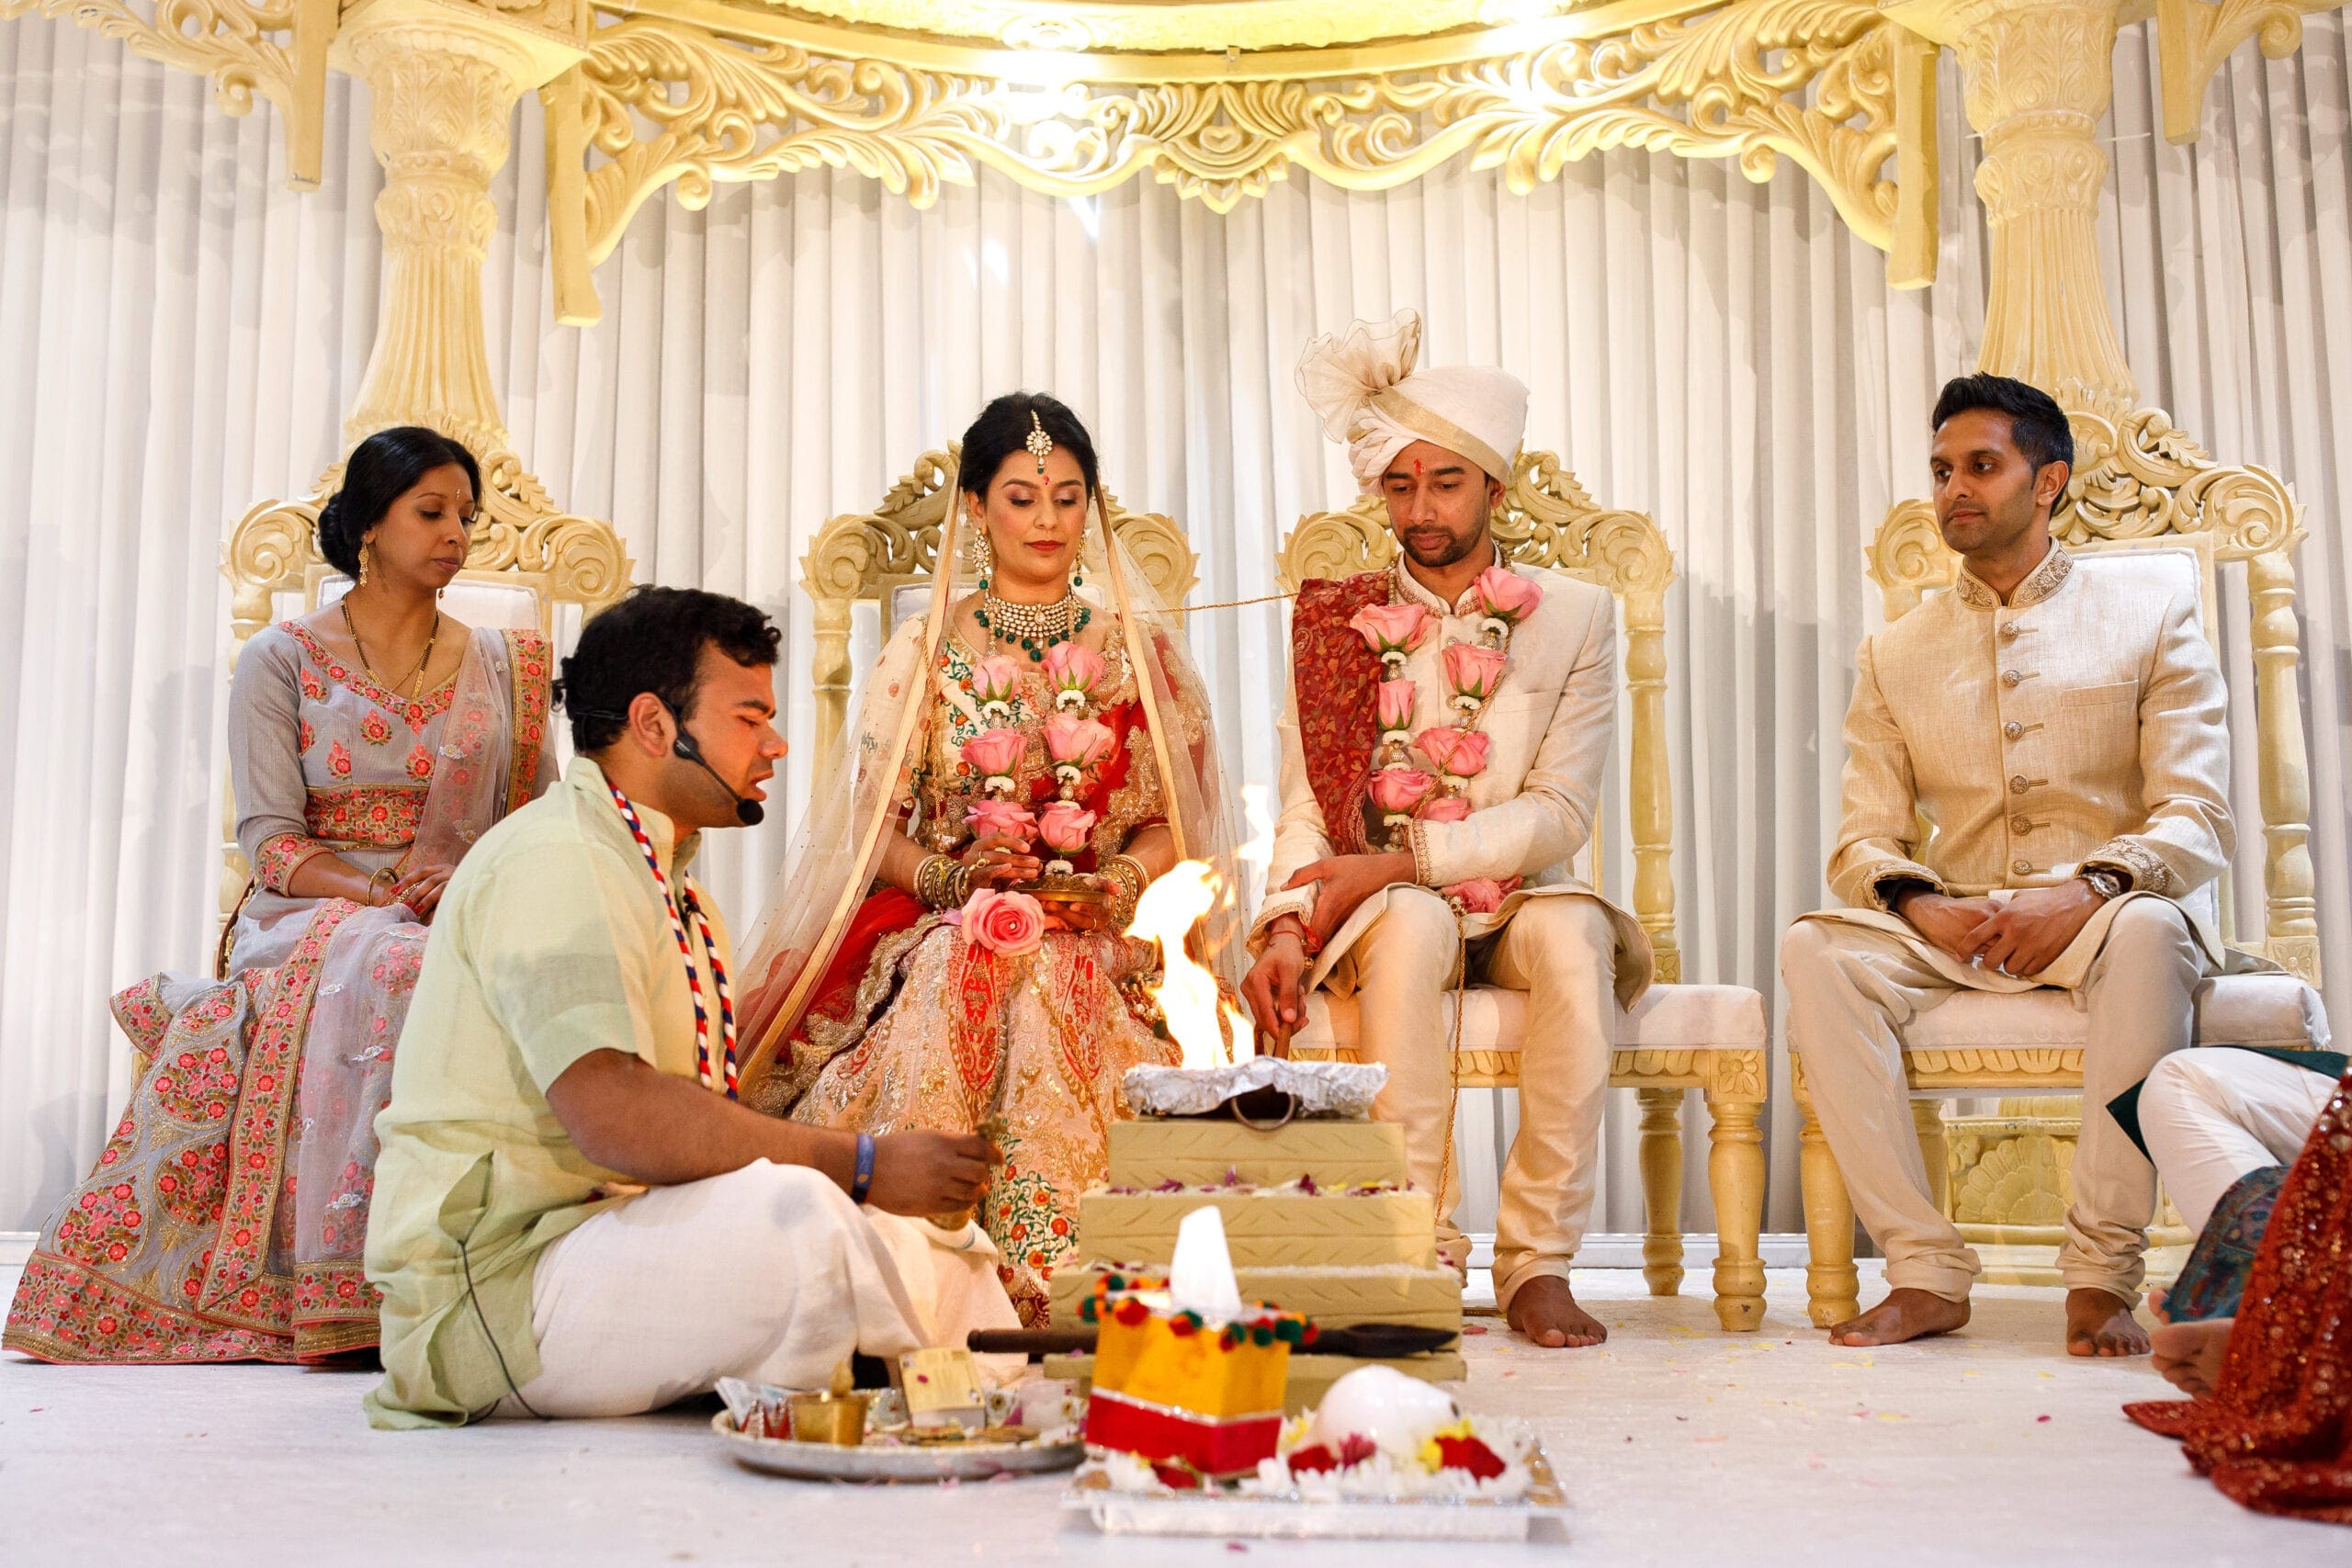 Couple sat down while a man lights a fire if their Hindu wedding